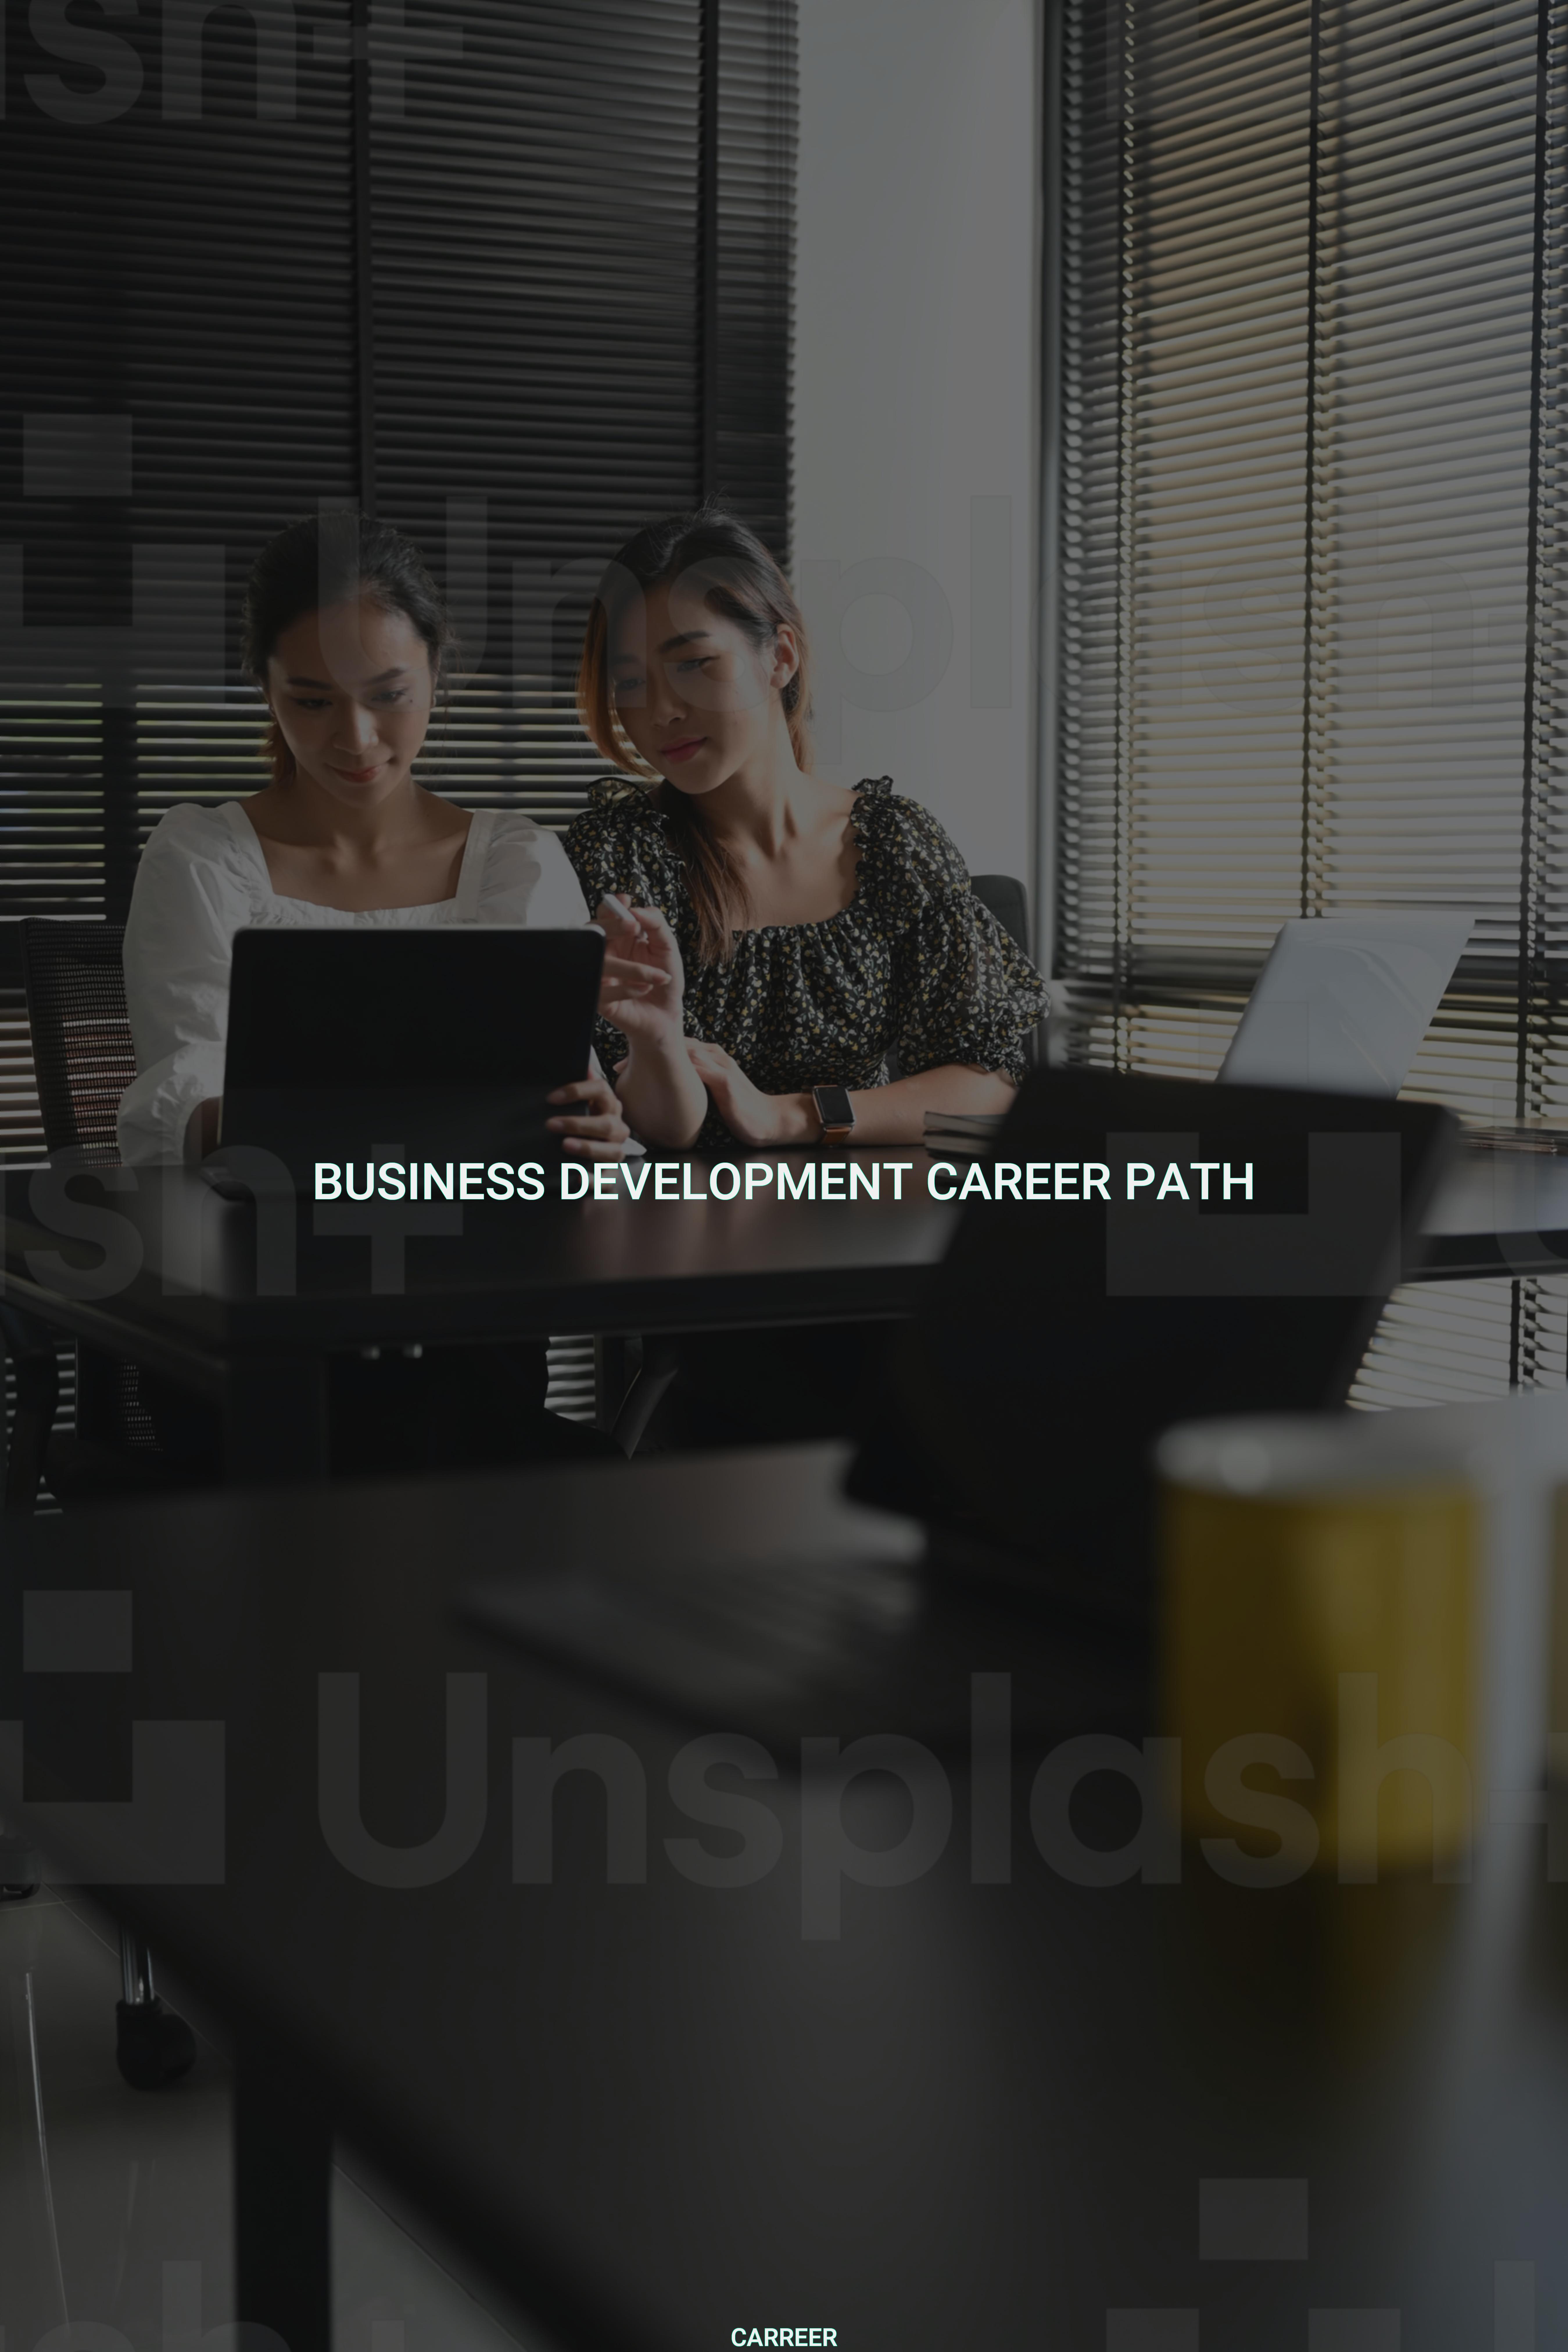 Business development career path